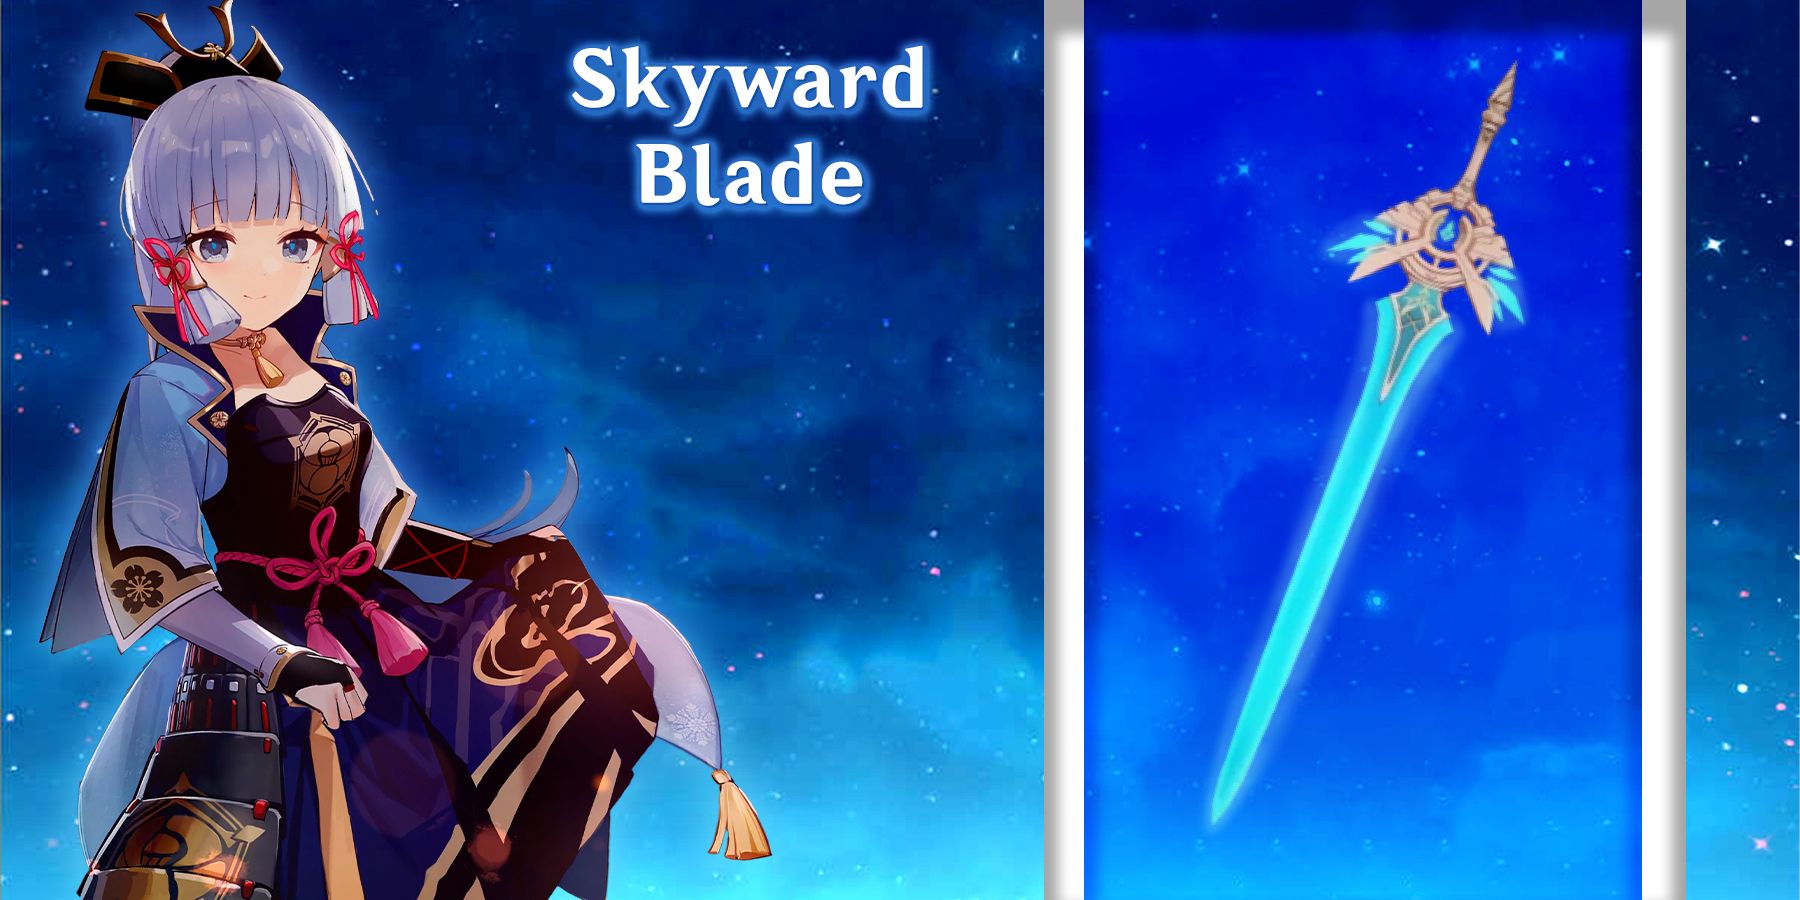 ayaka holding skyward blade in genshin impact